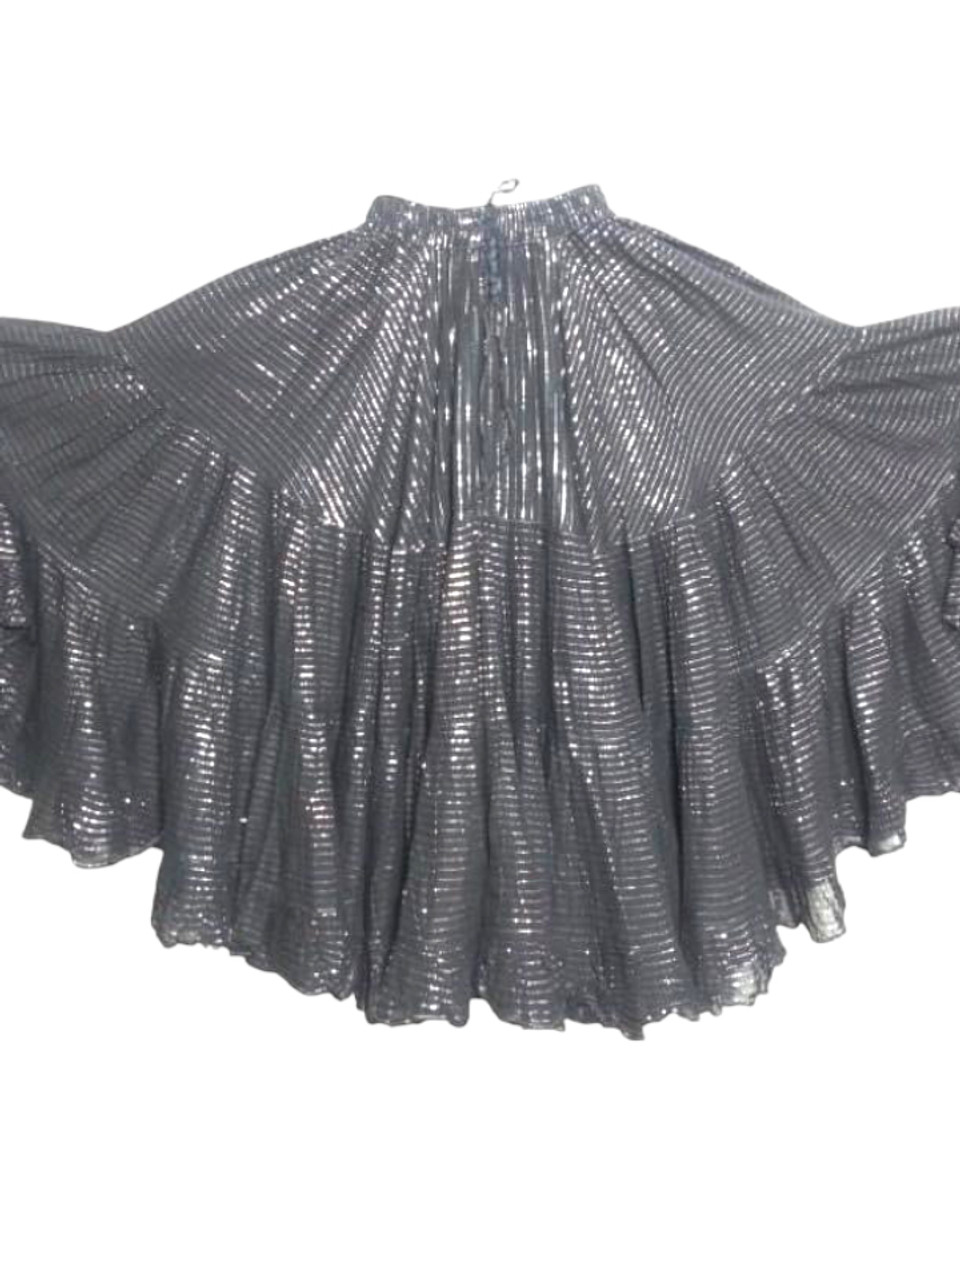 Gorgeous Black Silver 32 Yard Lurex Skirt - Magical Fashions